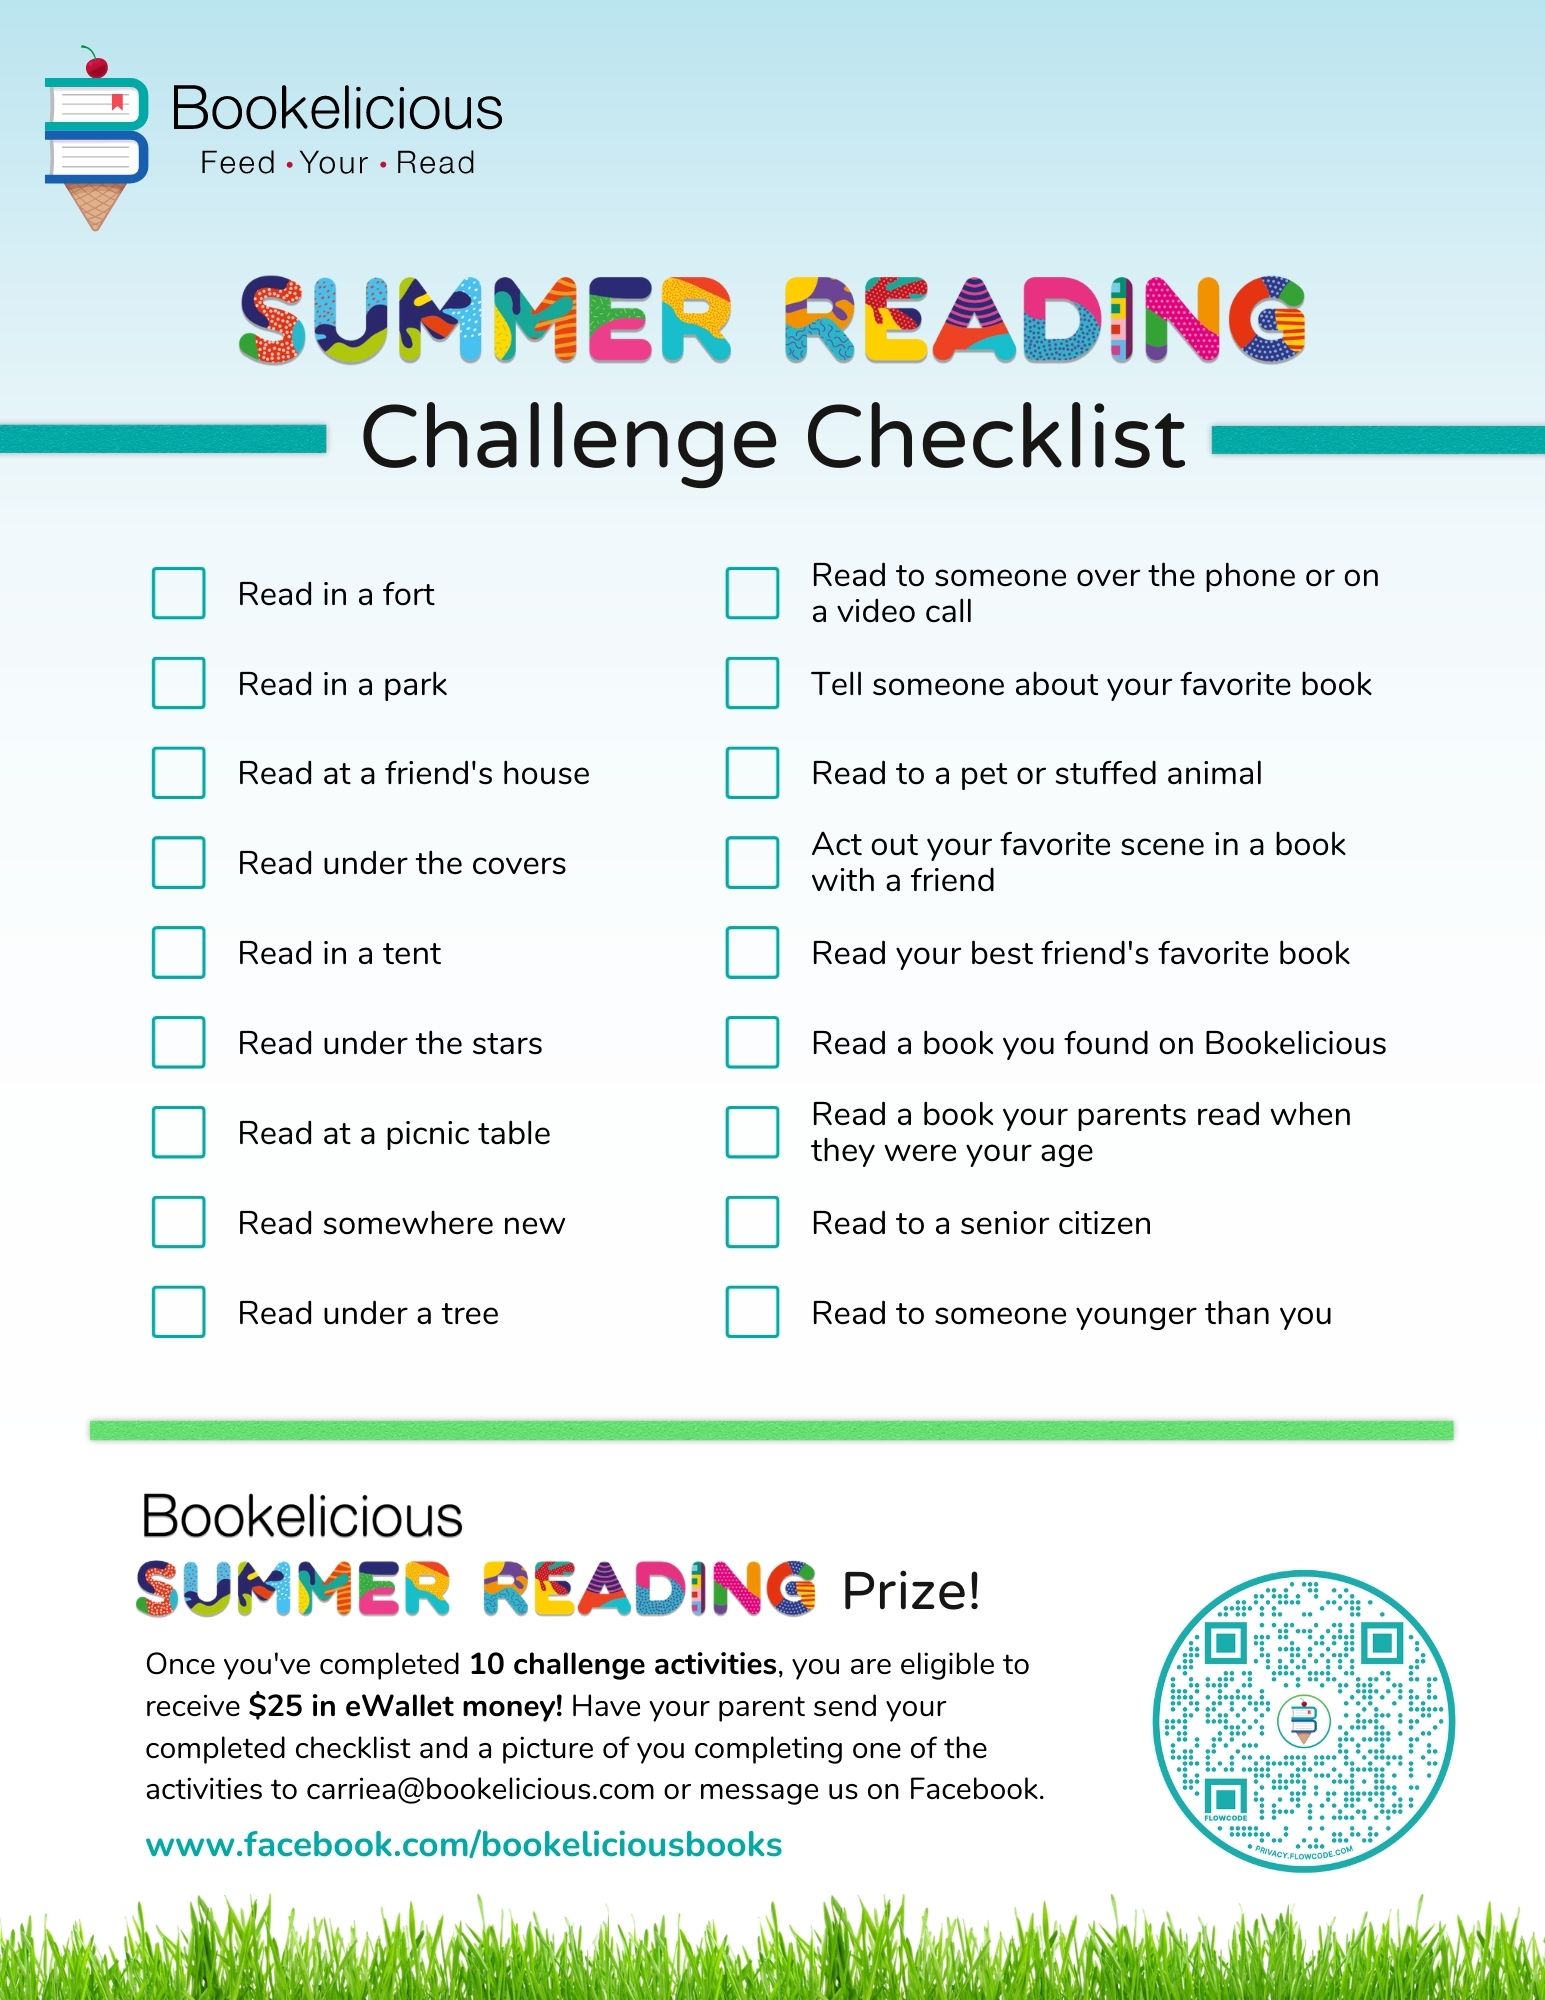 Bookelicious Summer Reading Challenge Checklist